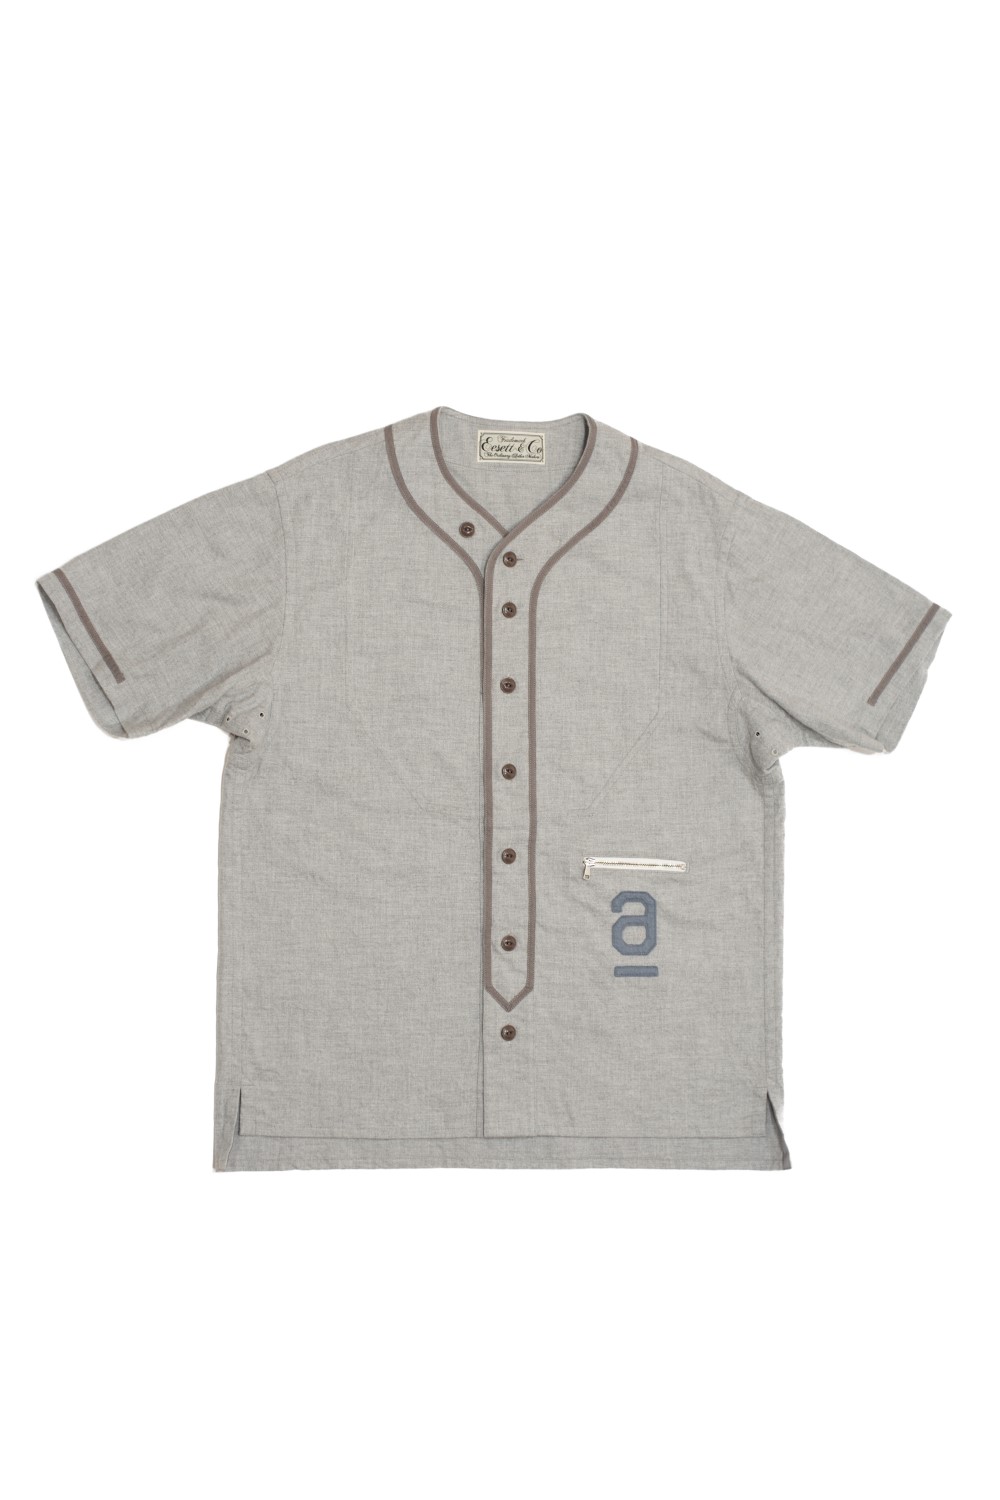 baseball shirt grey